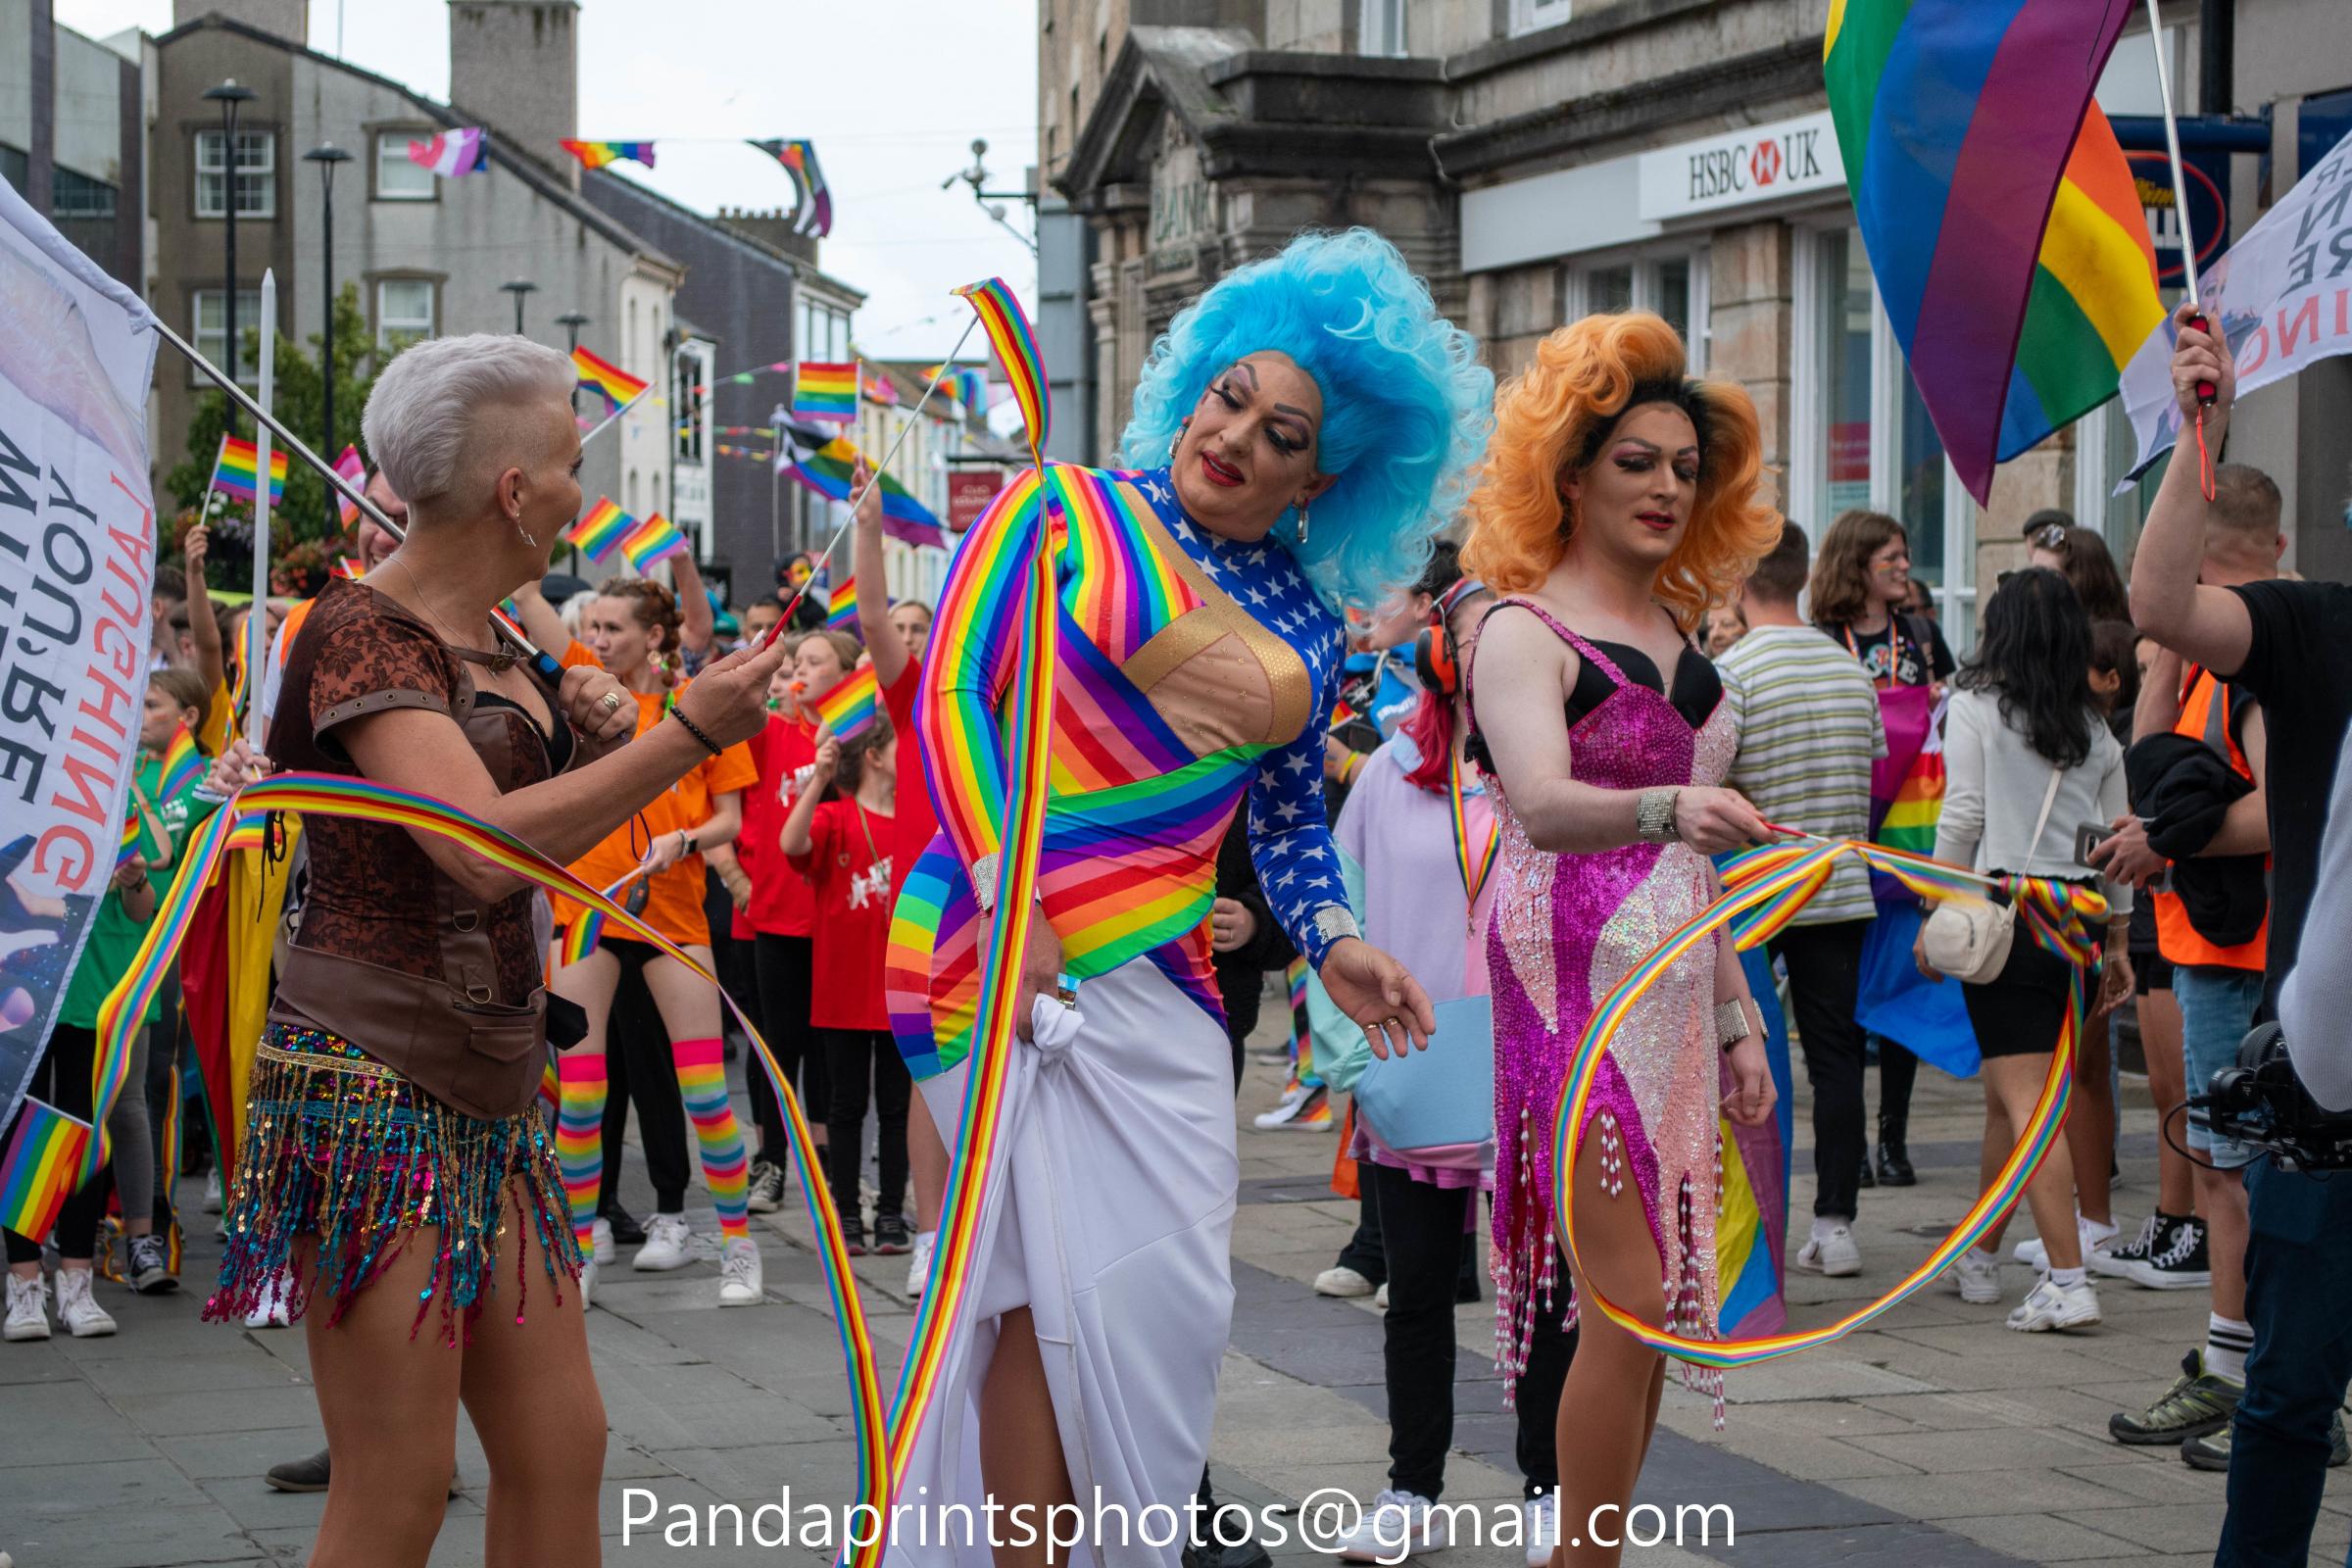 North Wales Pride in Bangor. Photo: PANDAPRINTS